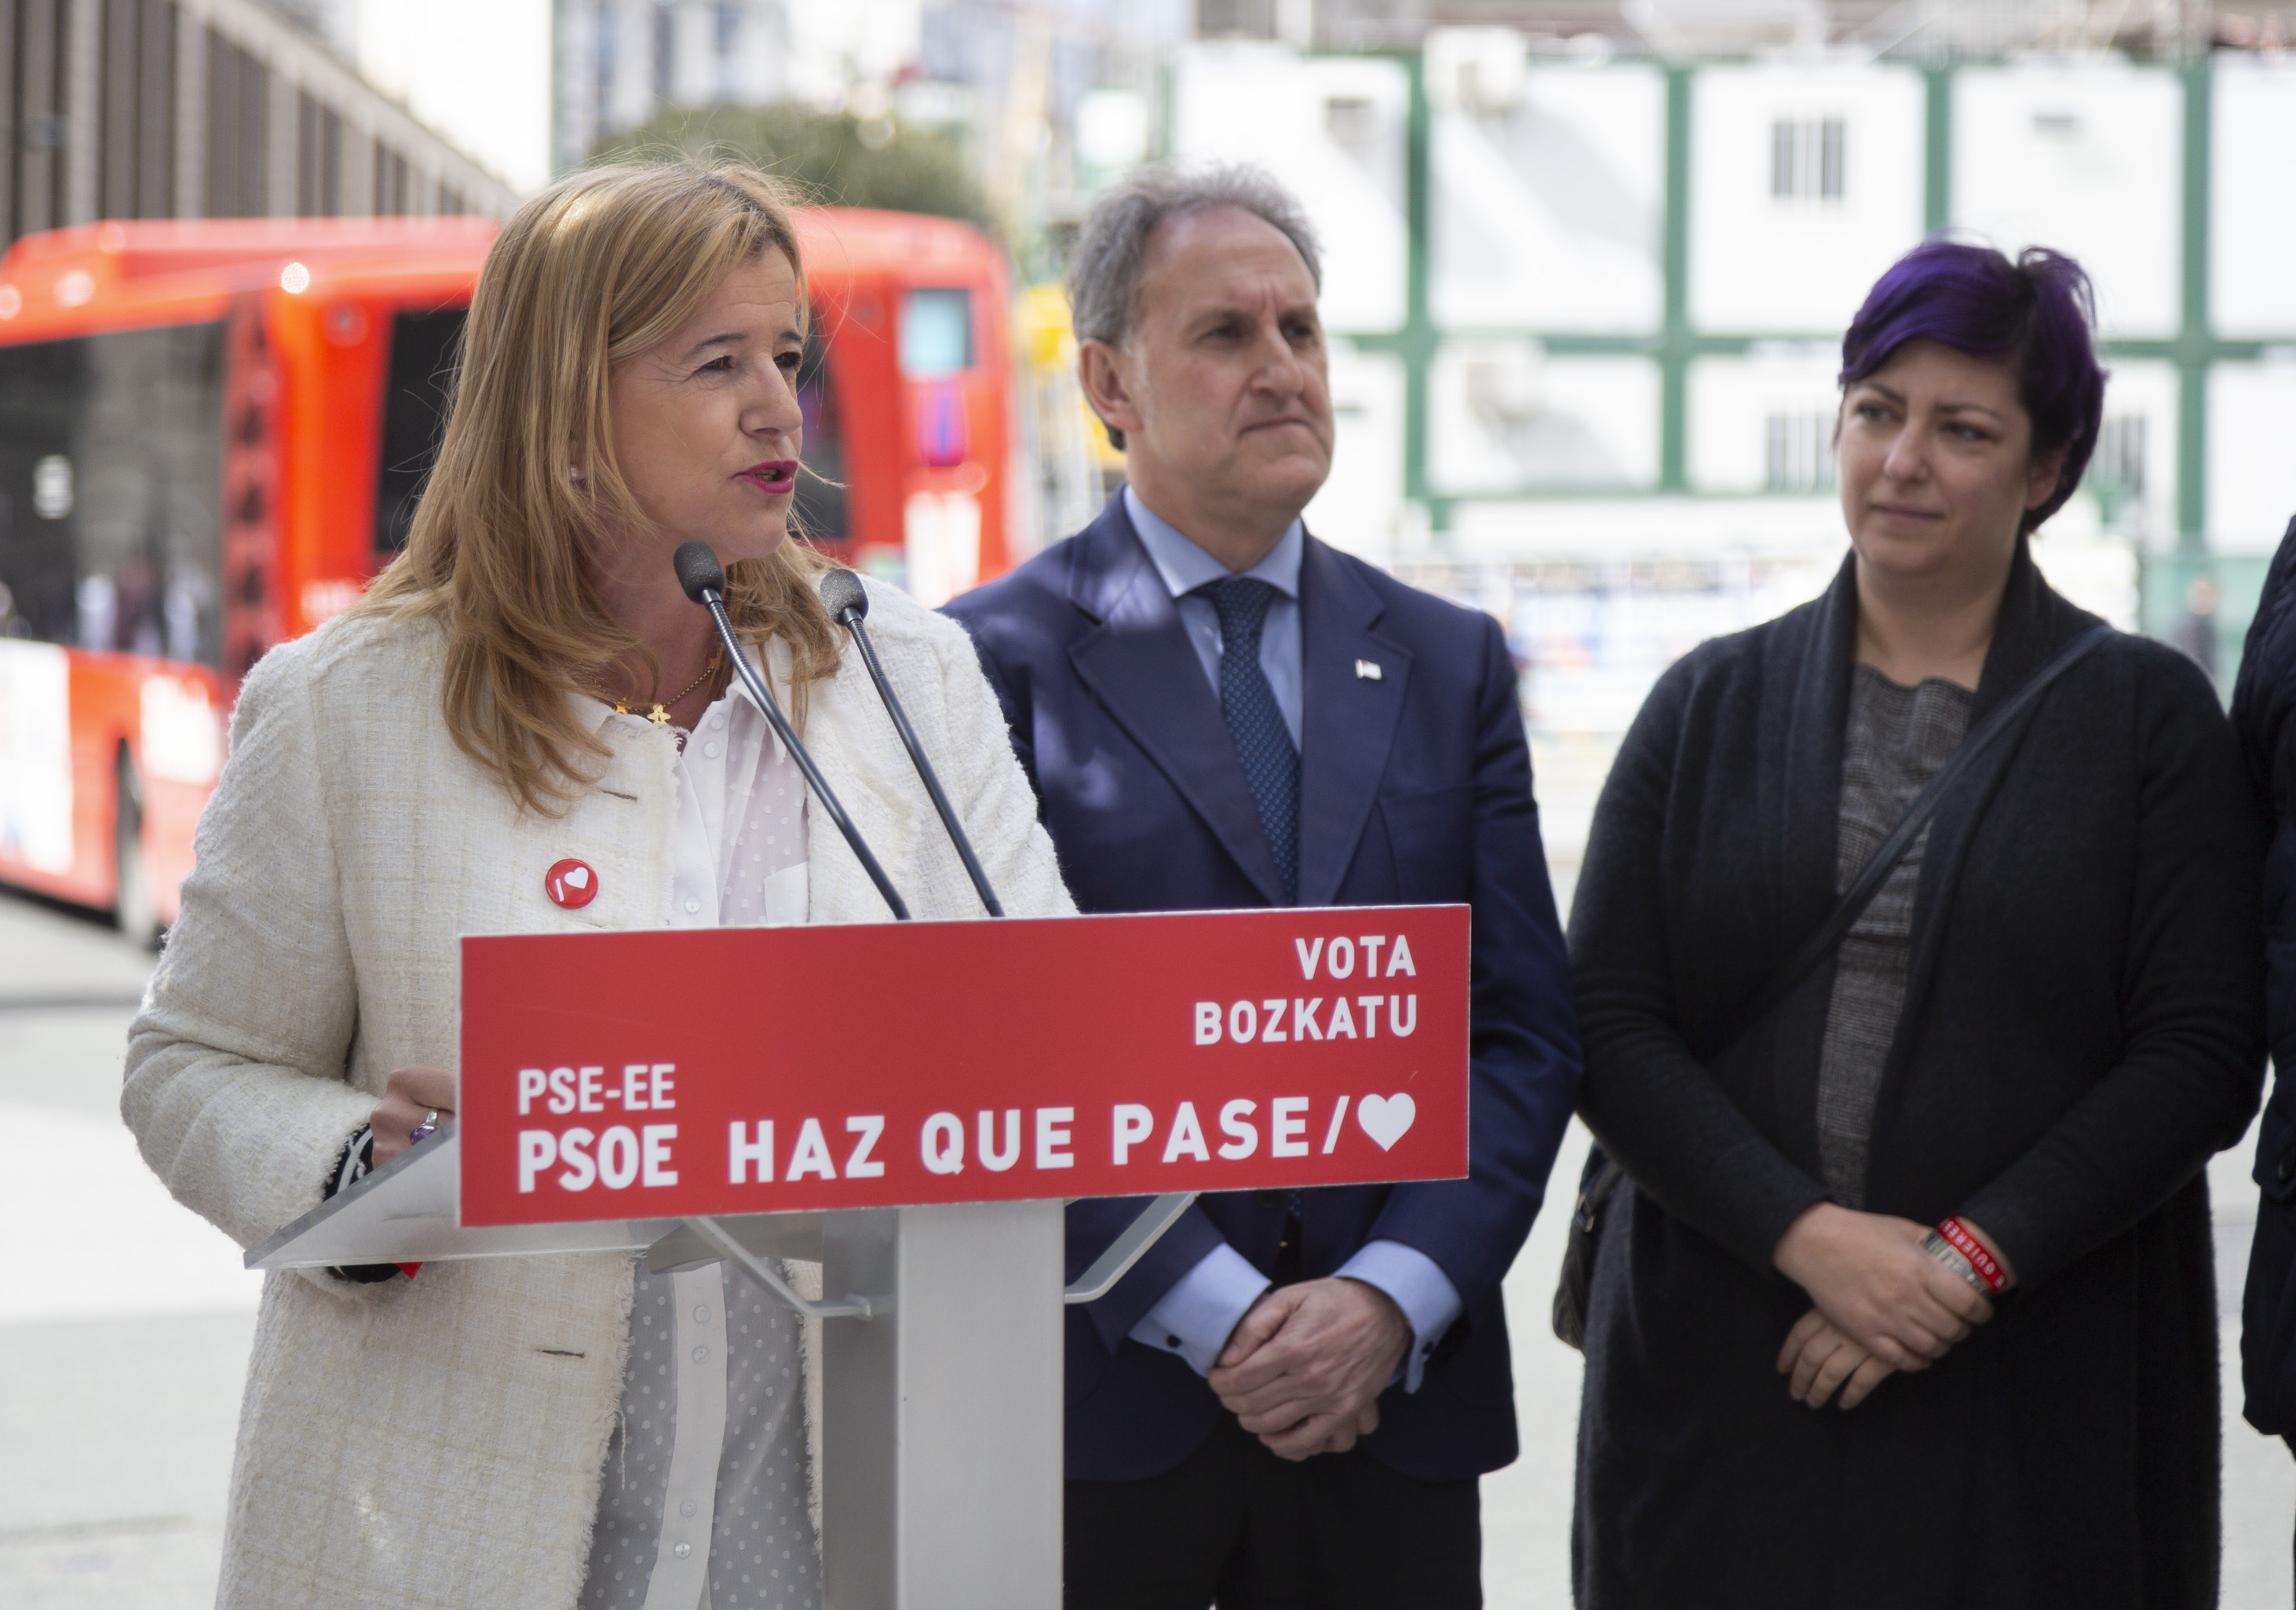 Teresa Laespada, acto político en Bilbao